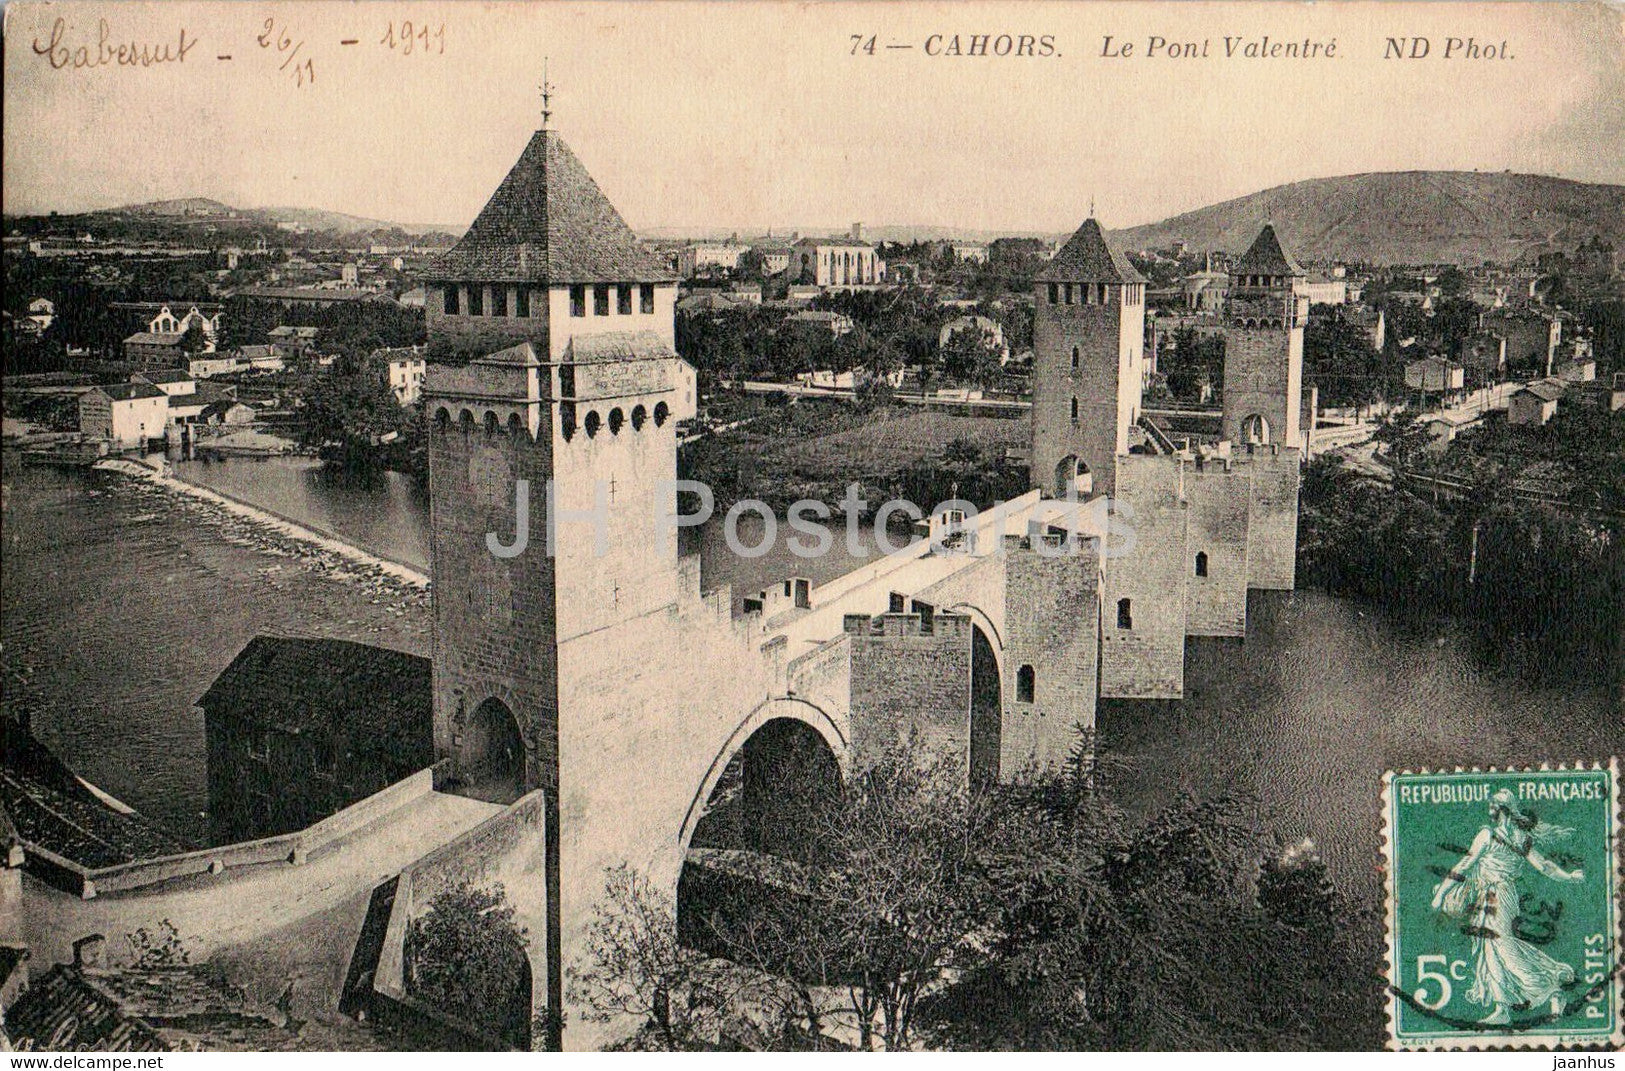 Cahors - Le Pont Valentre - bridge - 74 - old postcard - 1911 - France - used - JH Postcards